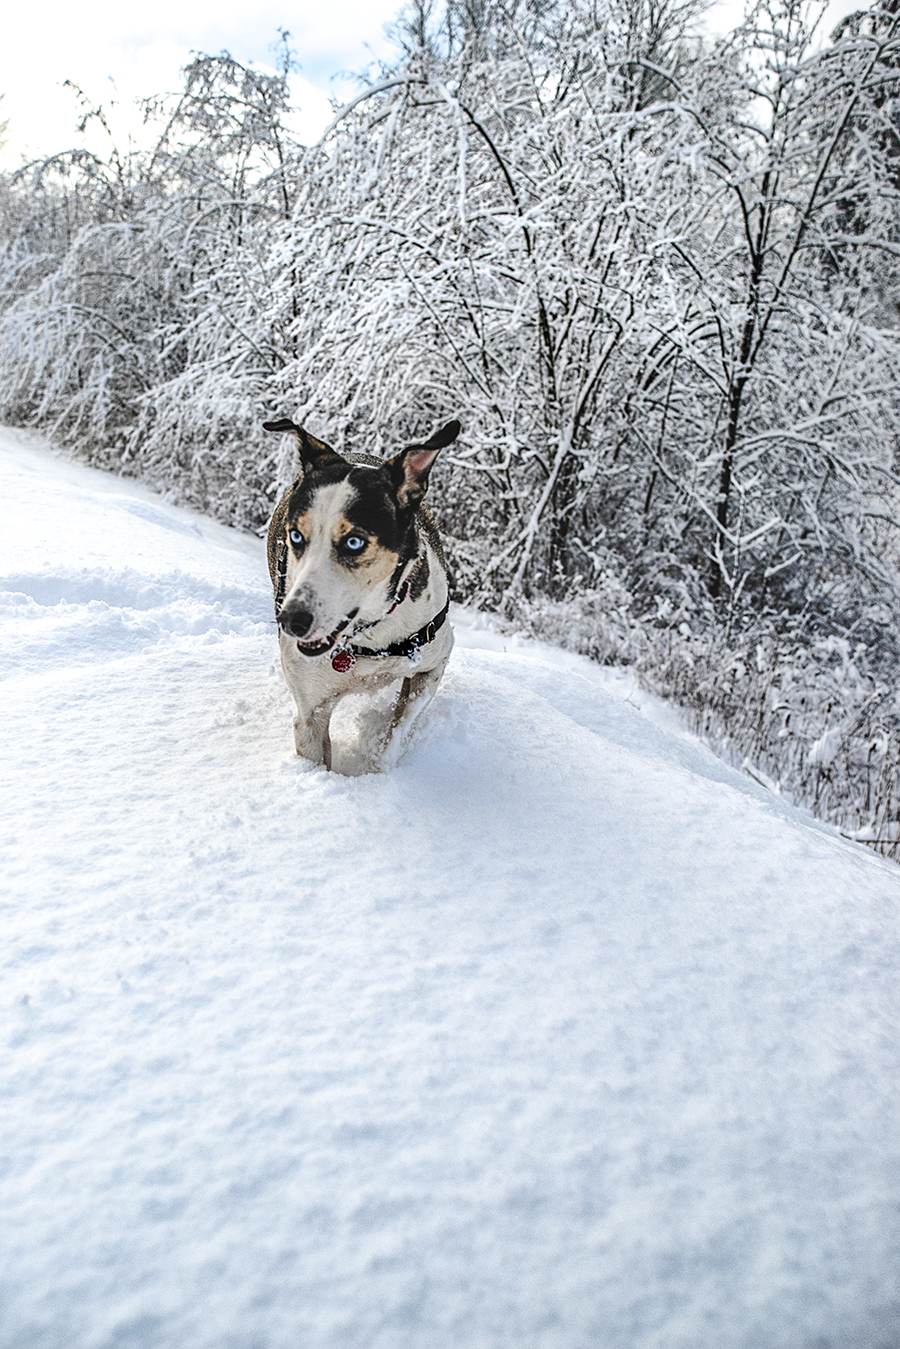 murphydog donates to TARC charity, winter portrait snow dog